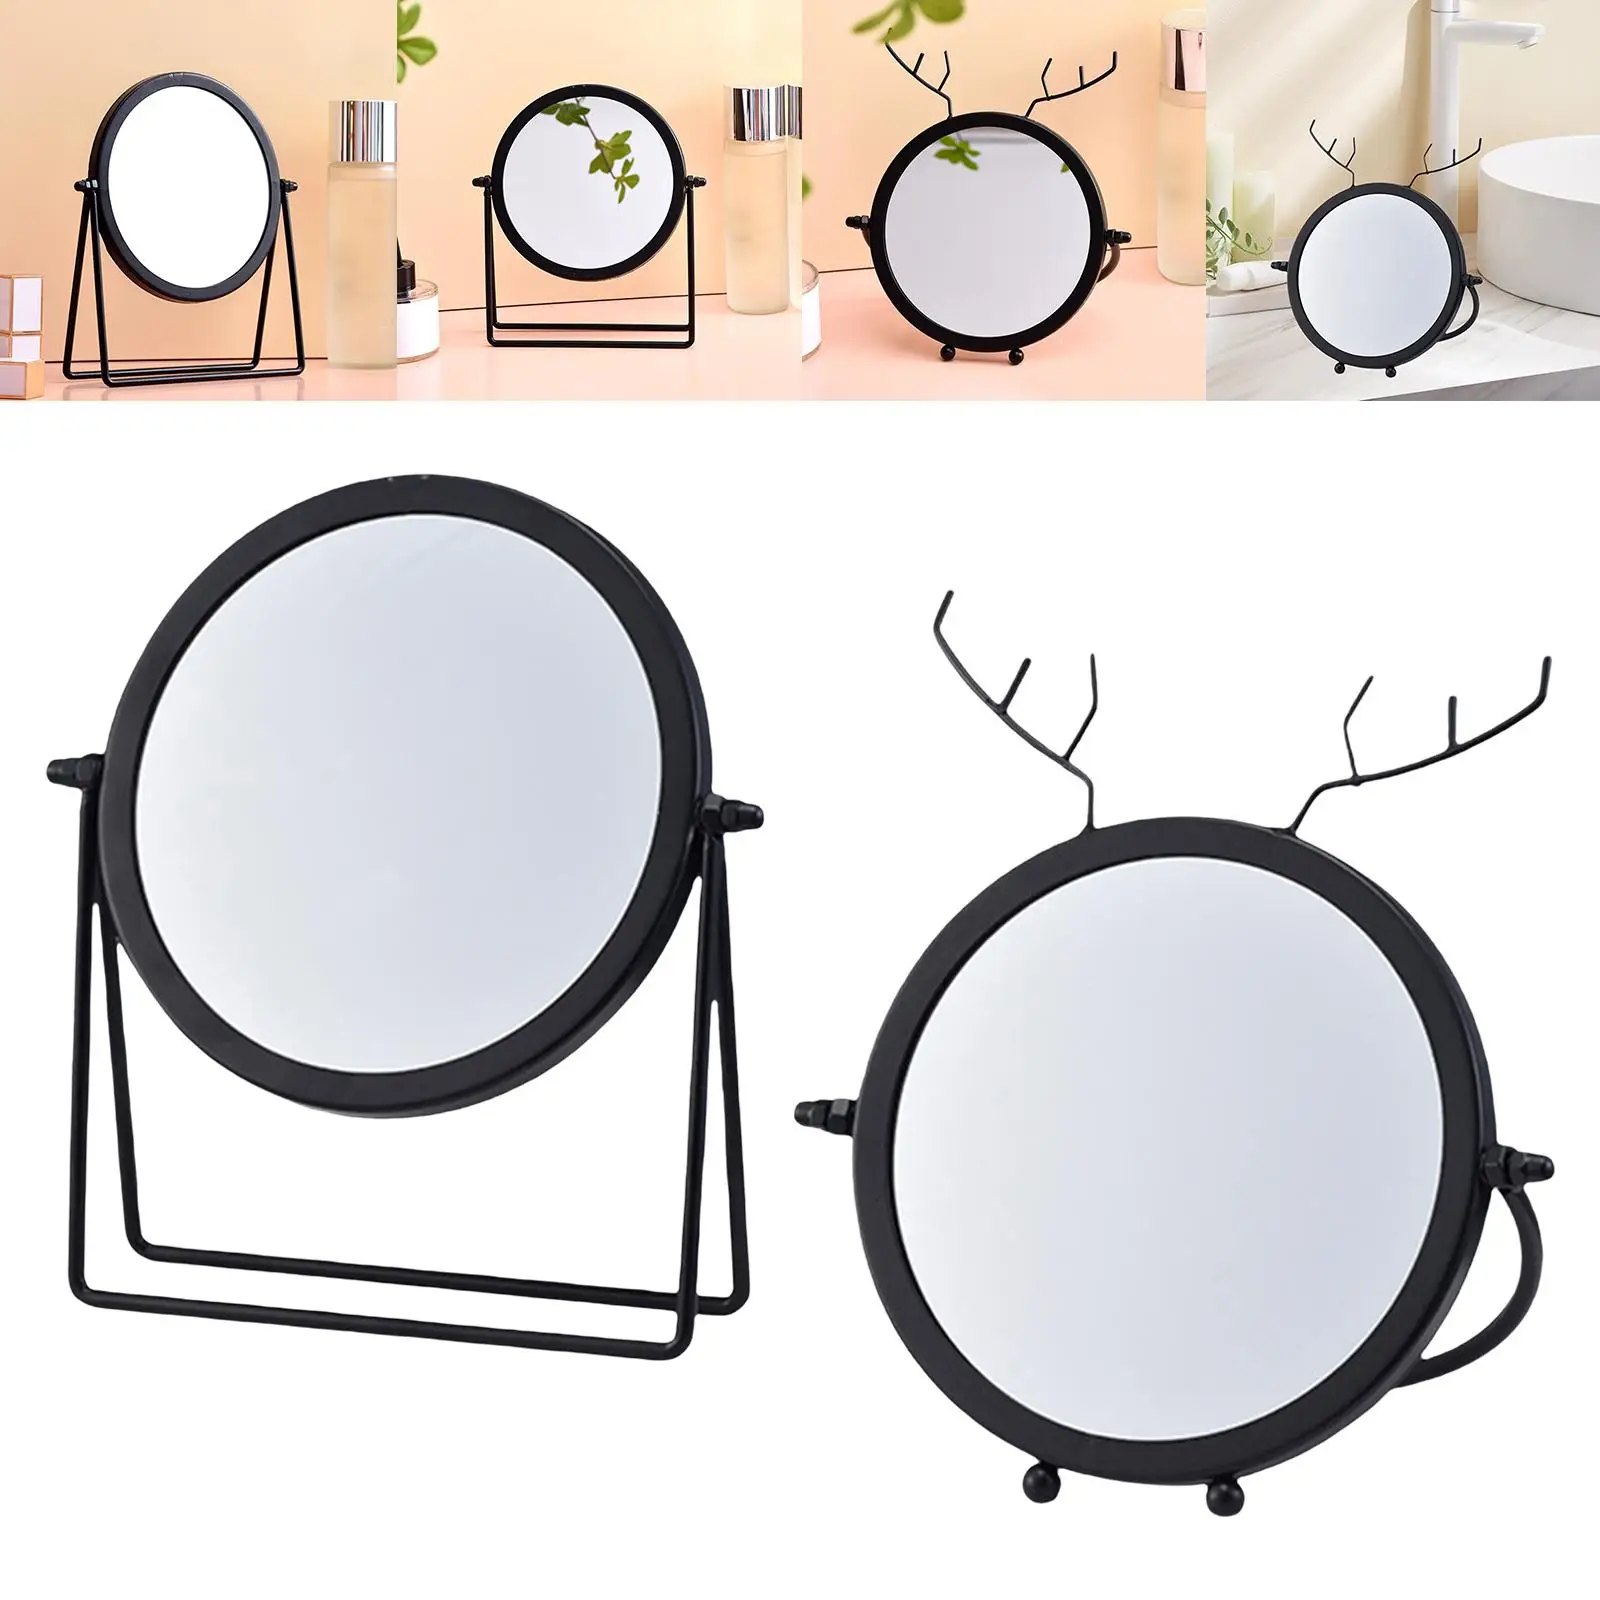 Table Mirror 360 Degree Swivel Mirror Dressing Table Mirror Simple Iron Art Modern Desk Mirror for Bathroom Dresser Home Women